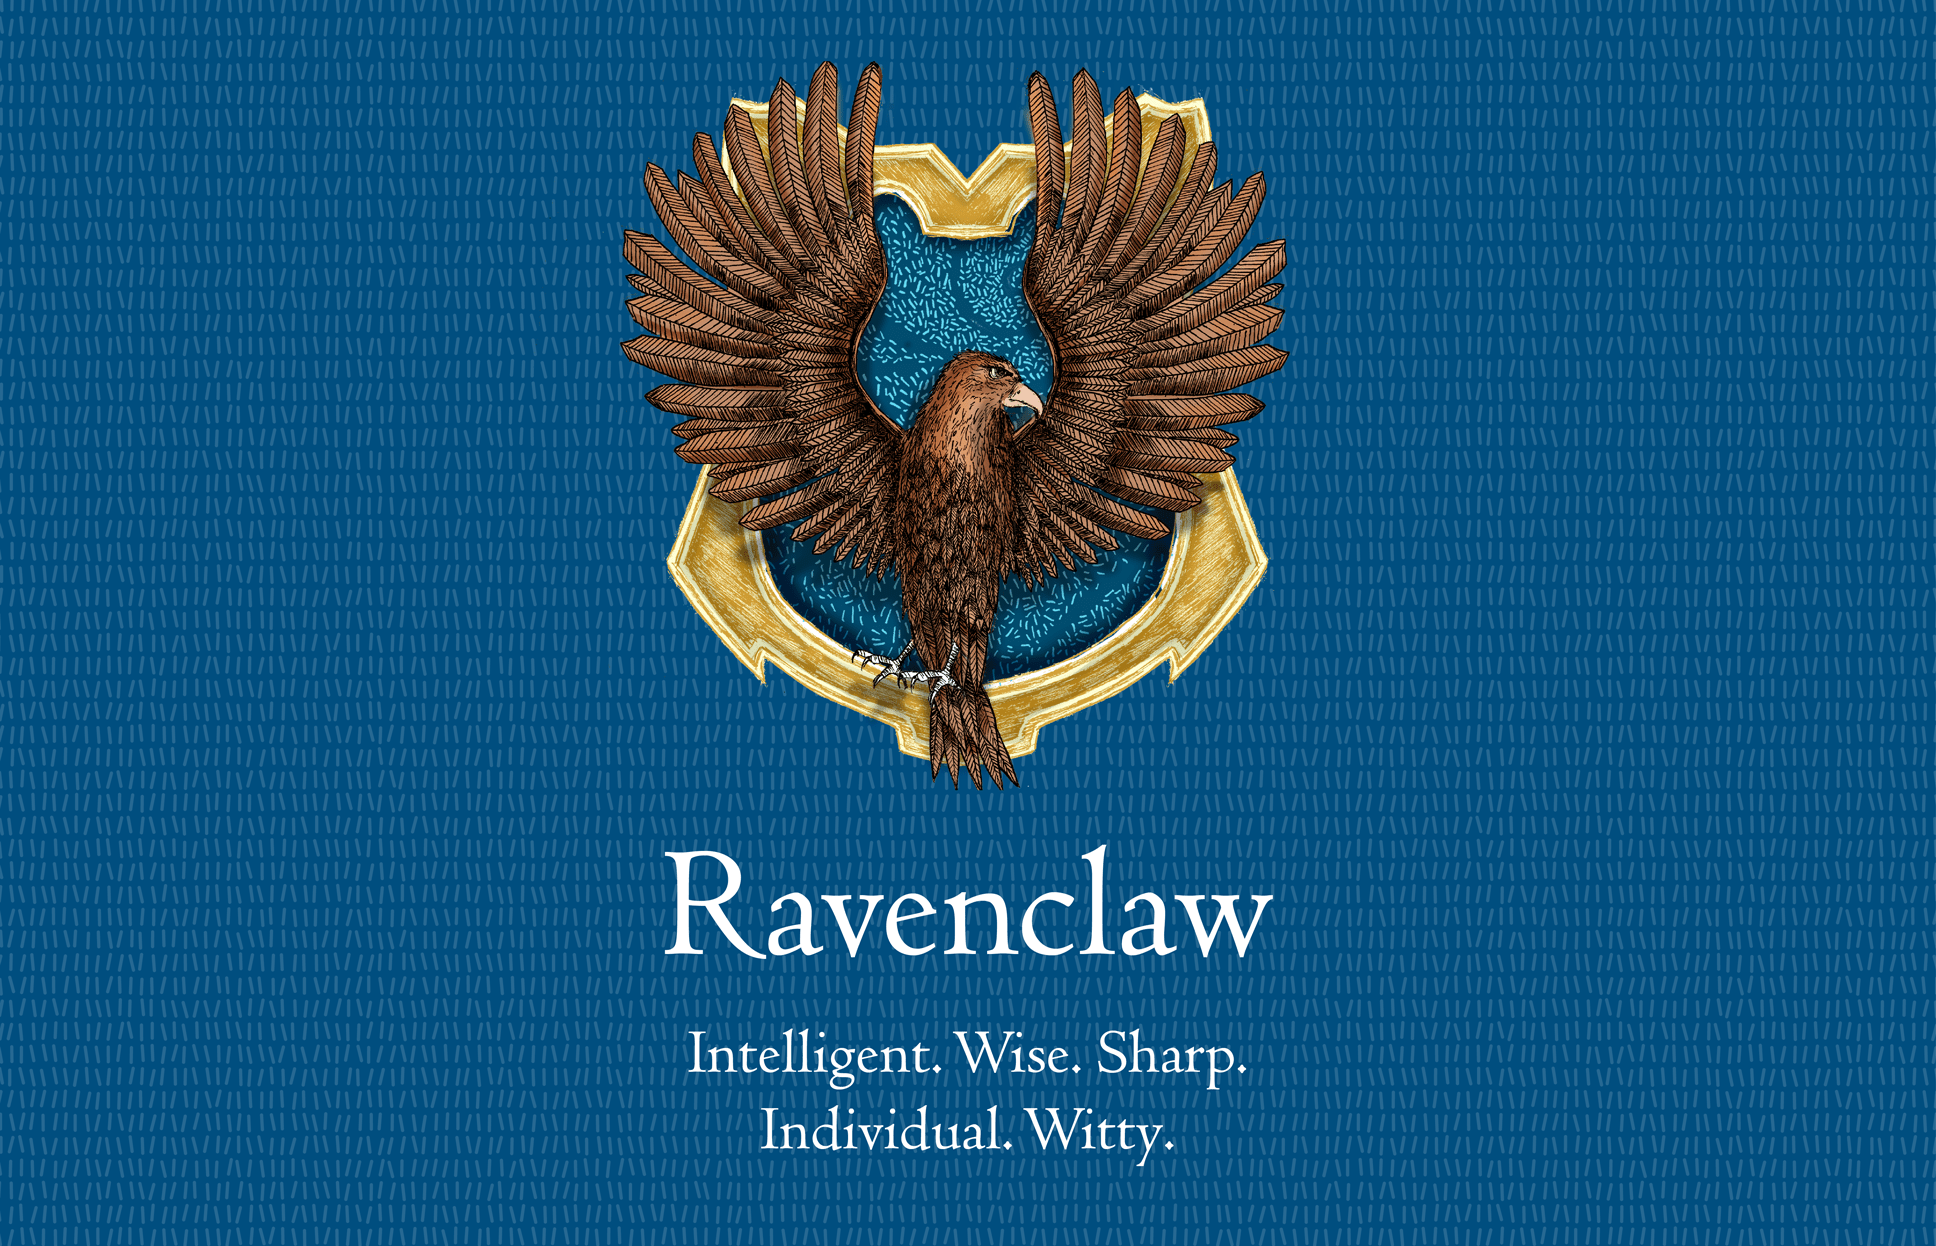 Ravenclaw House  A Hogwarts Student